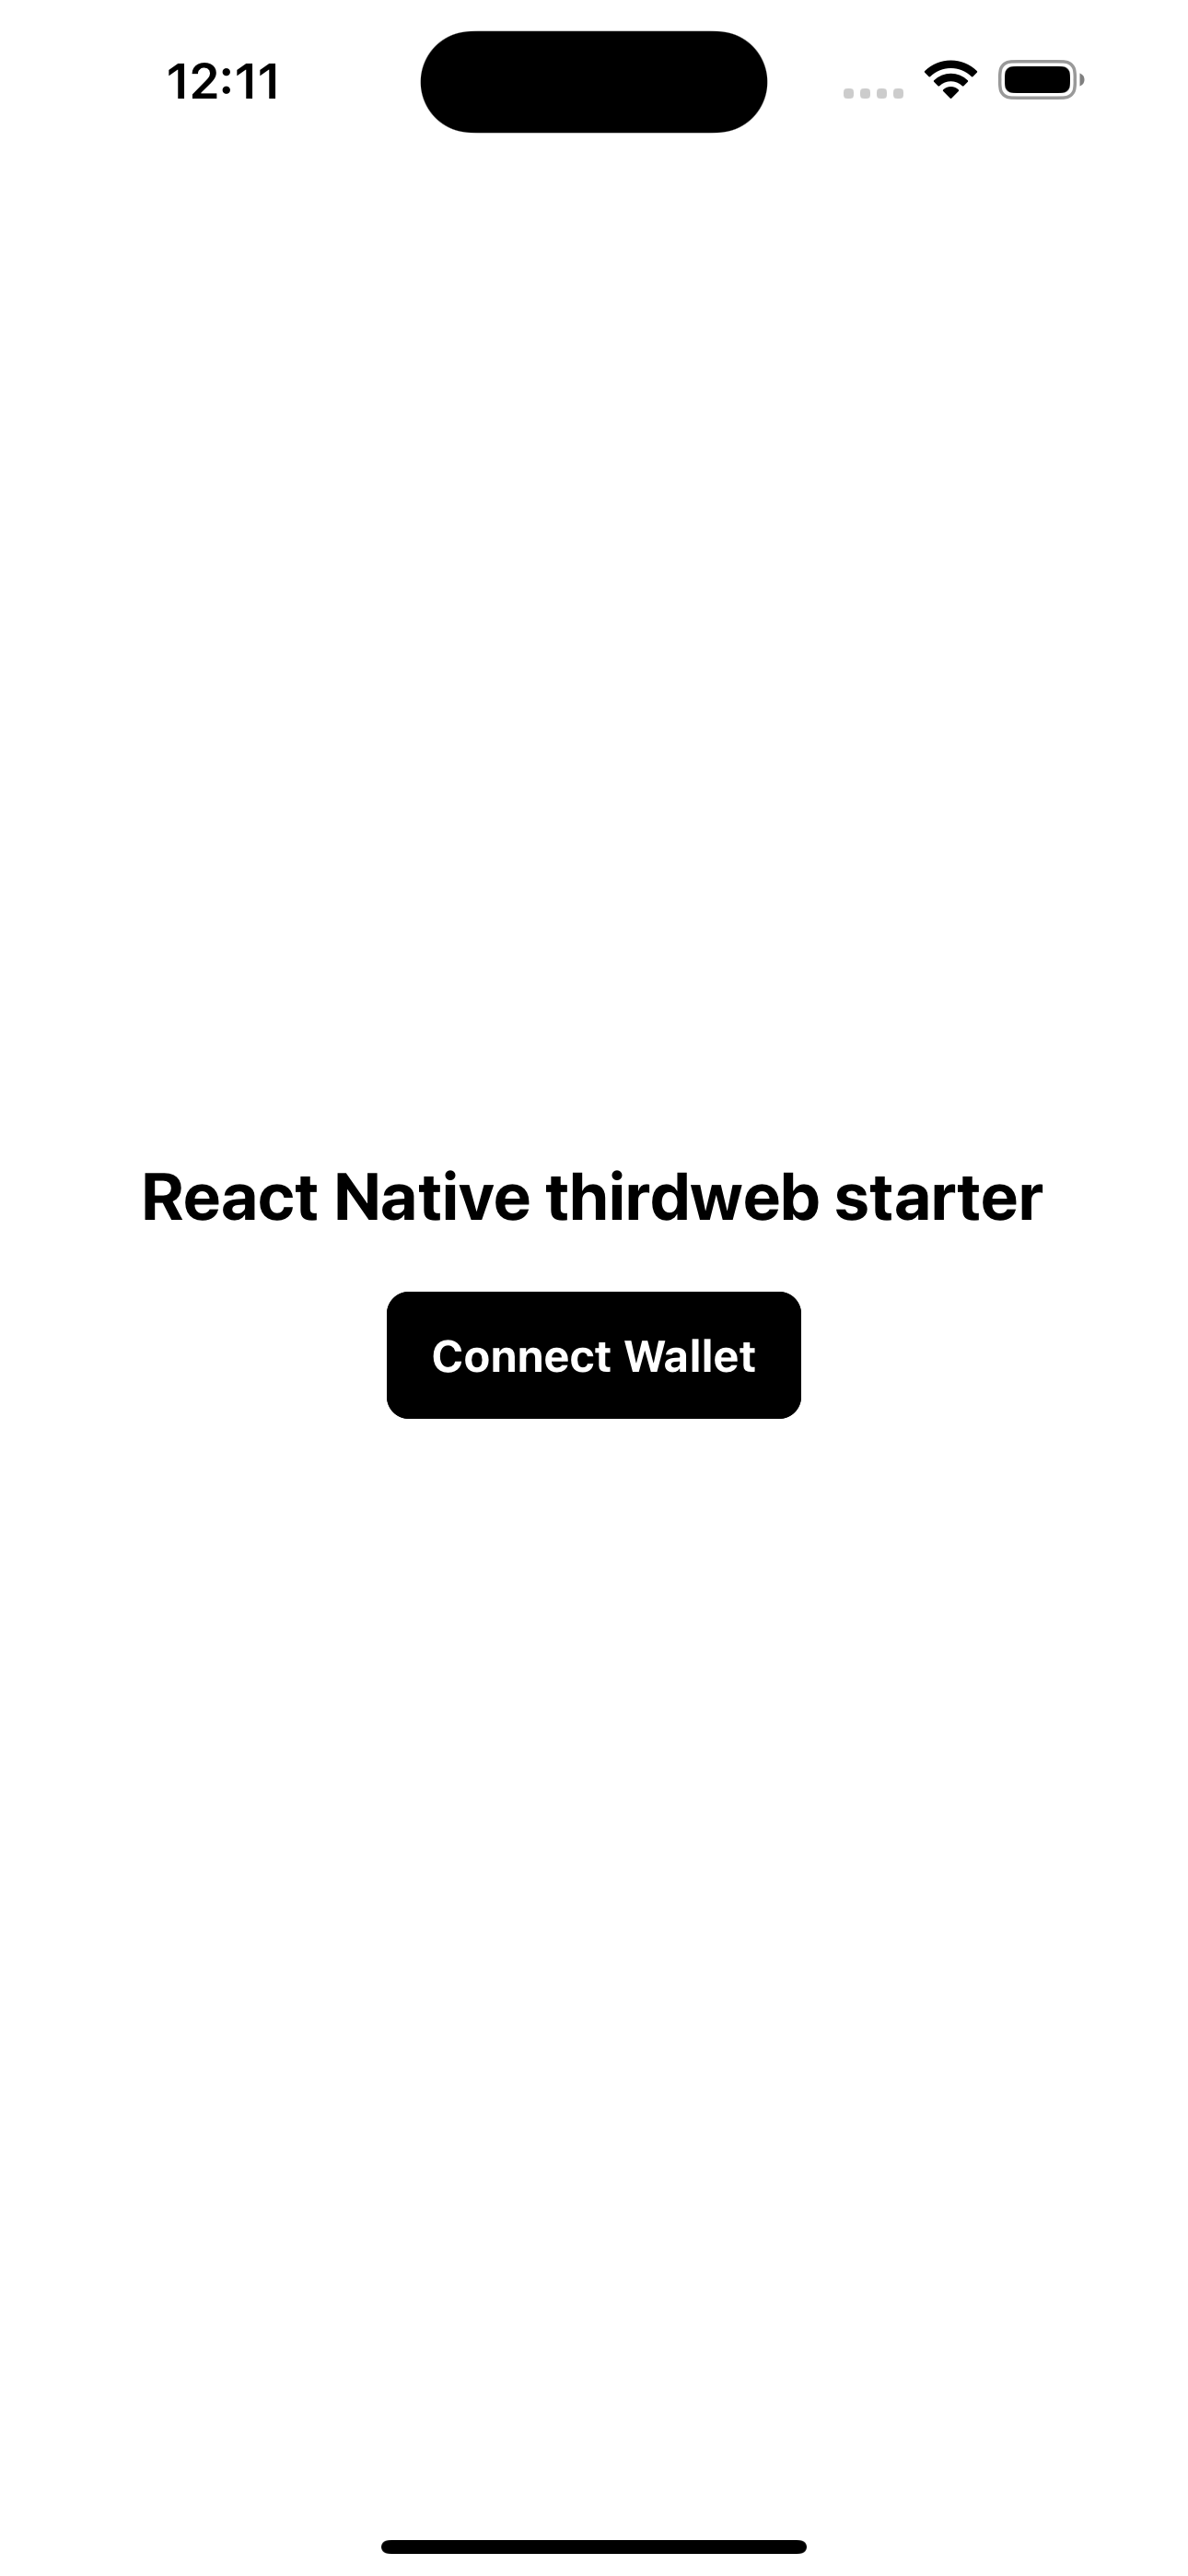 React native thirdweb starter